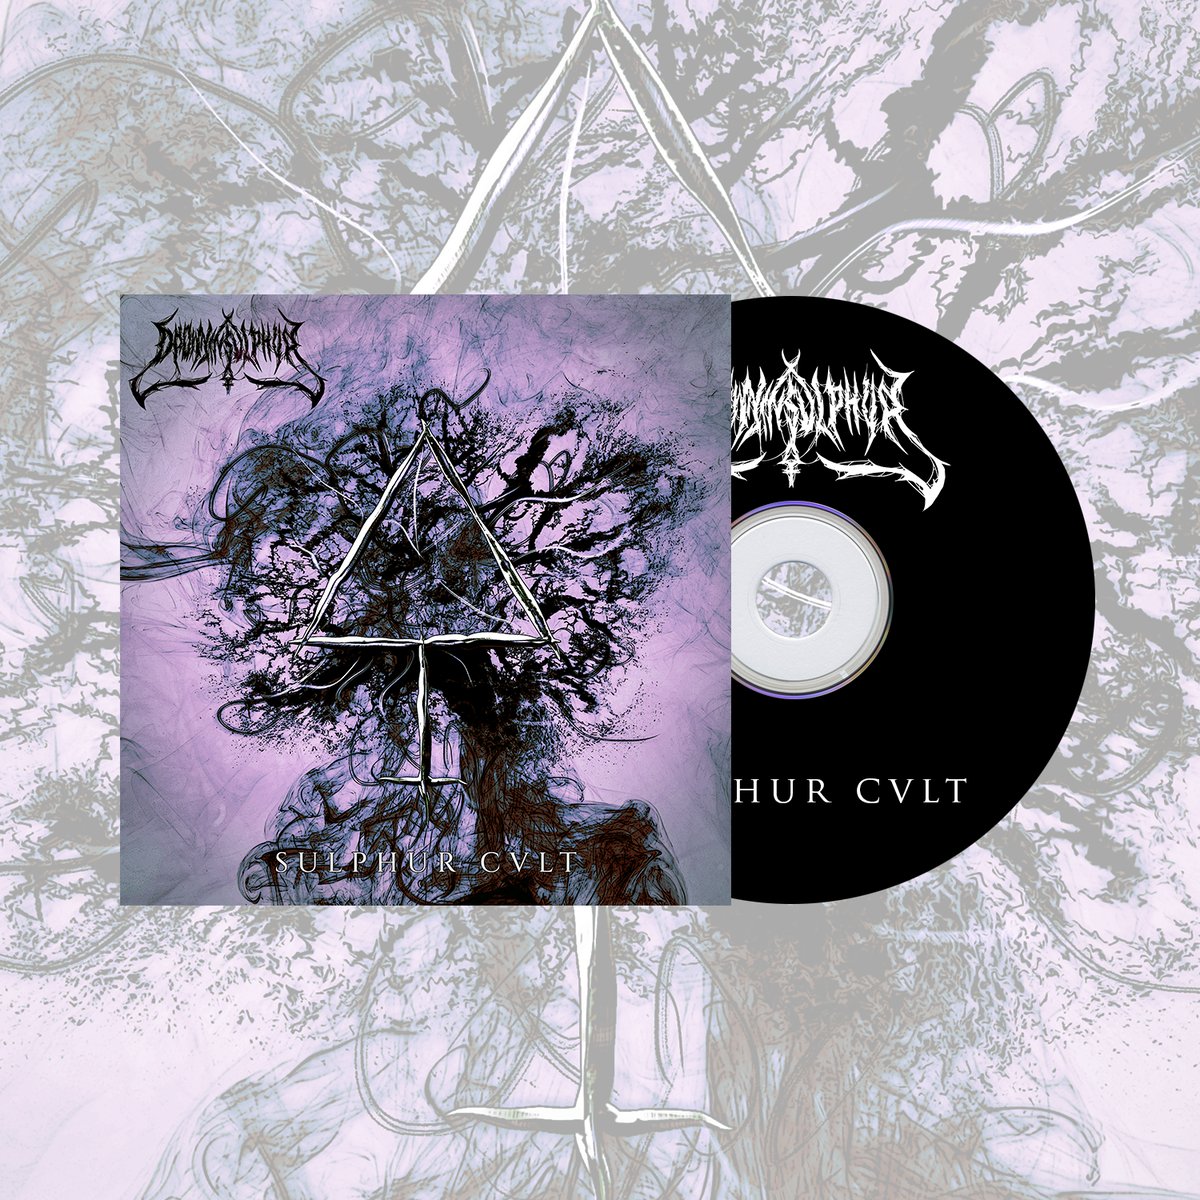 Image of Sulphur Cvlt Album